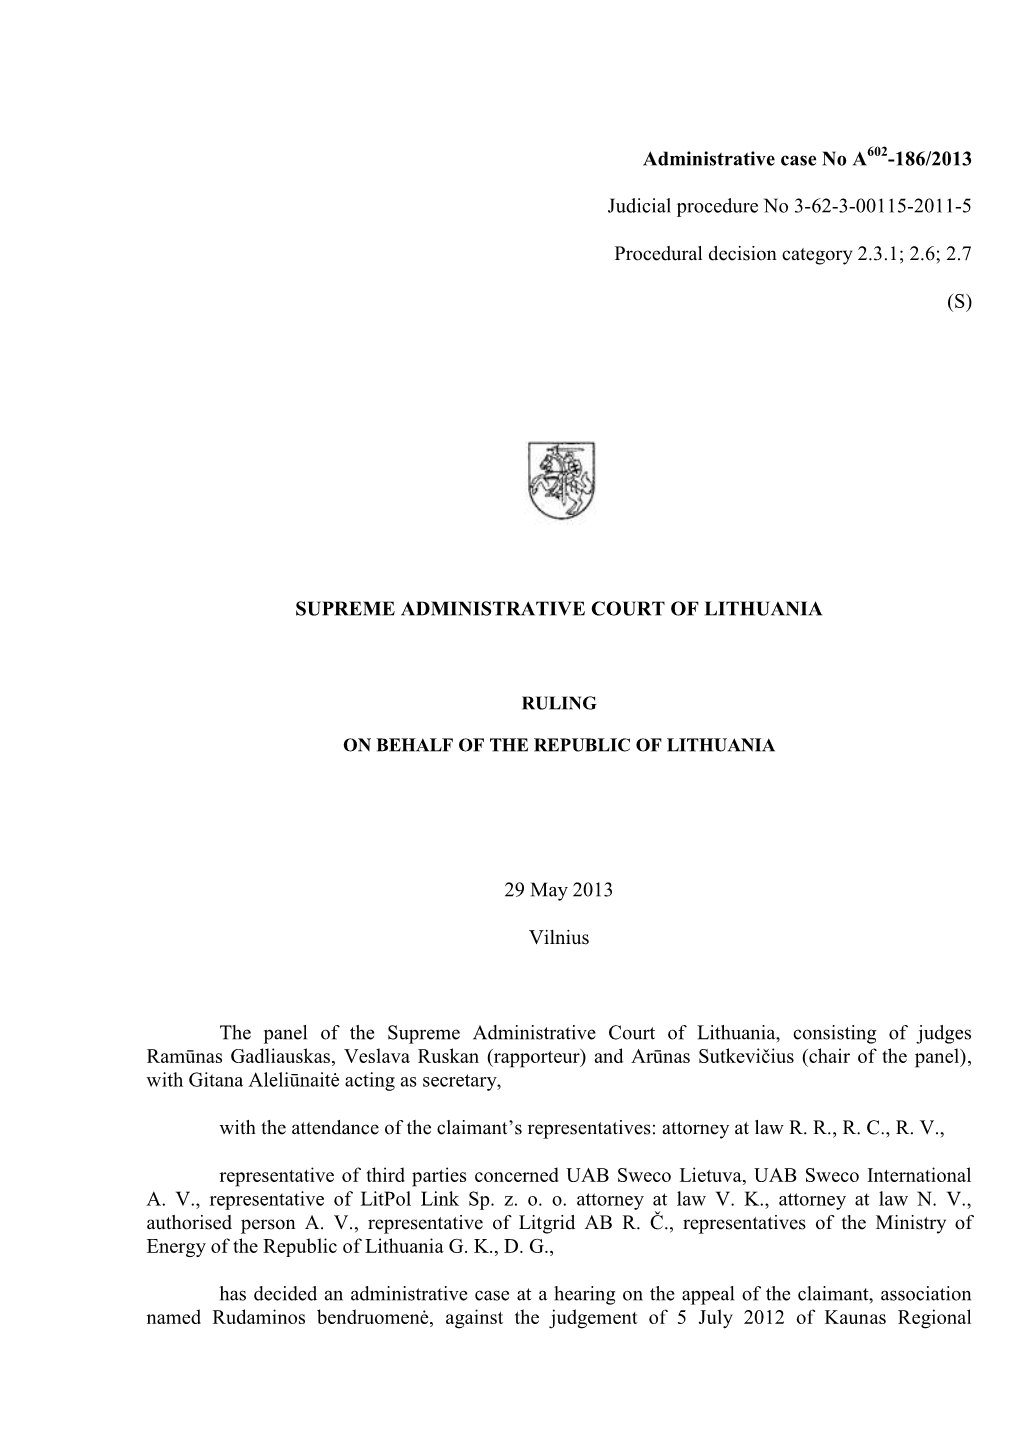 Administrative Case No A602-186/2013